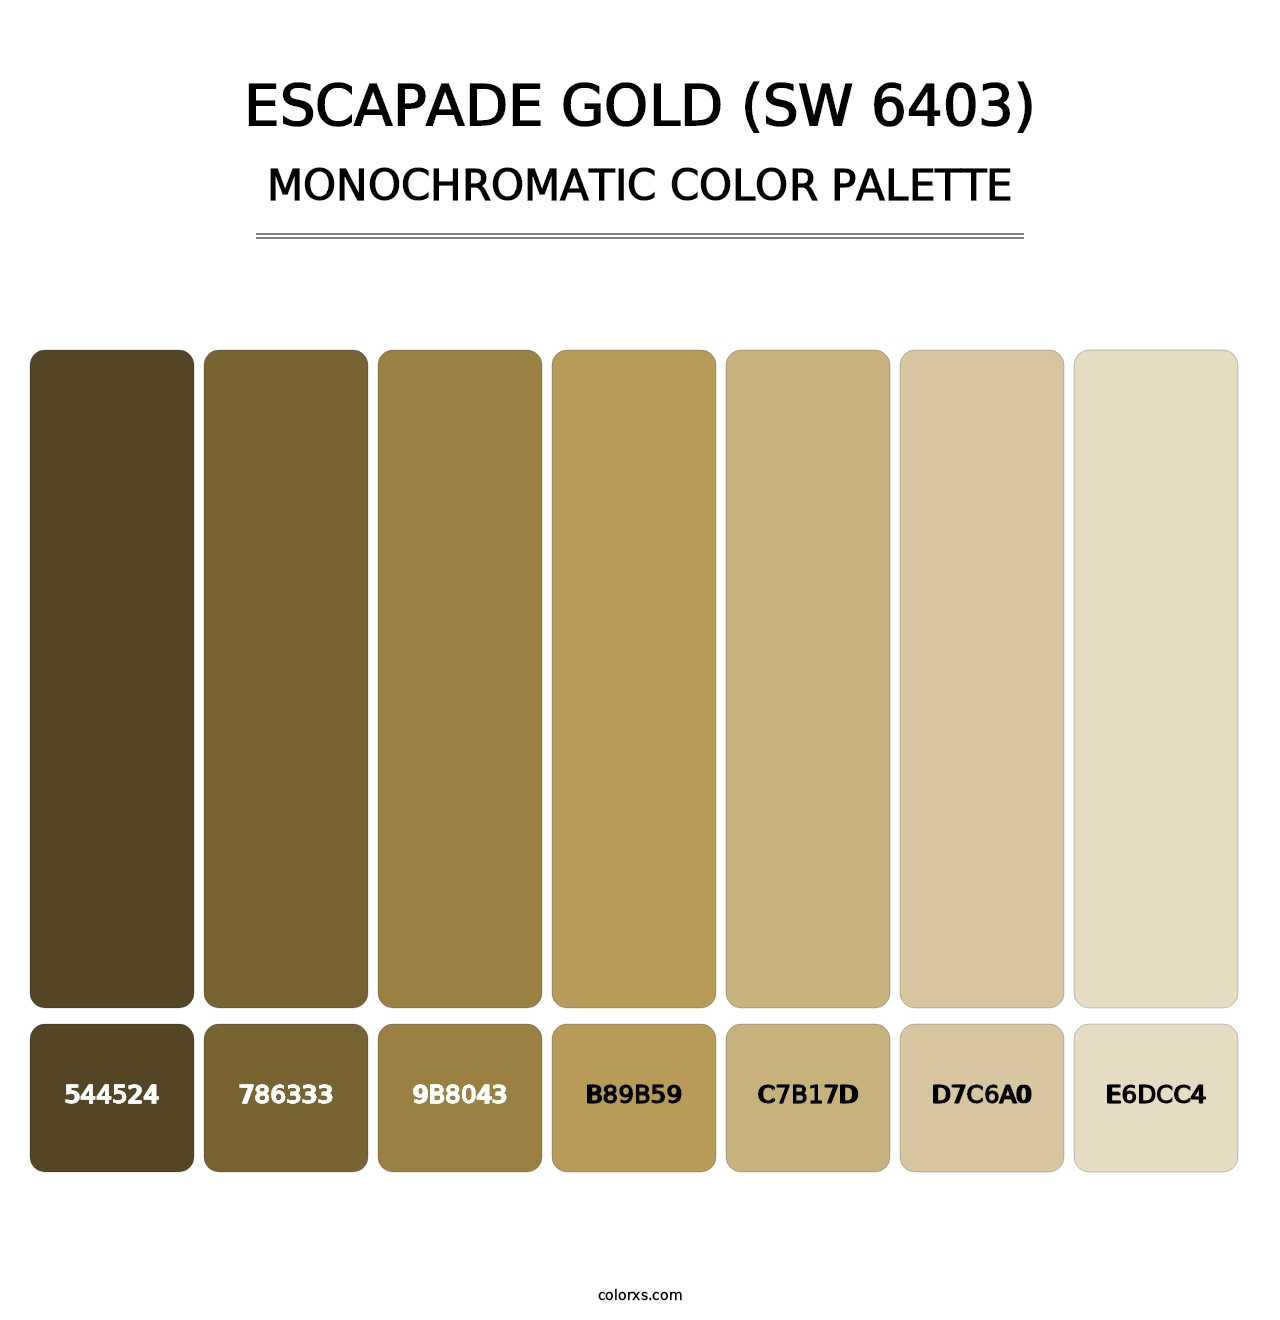 Escapade Gold (SW 6403) - Monochromatic Color Palette